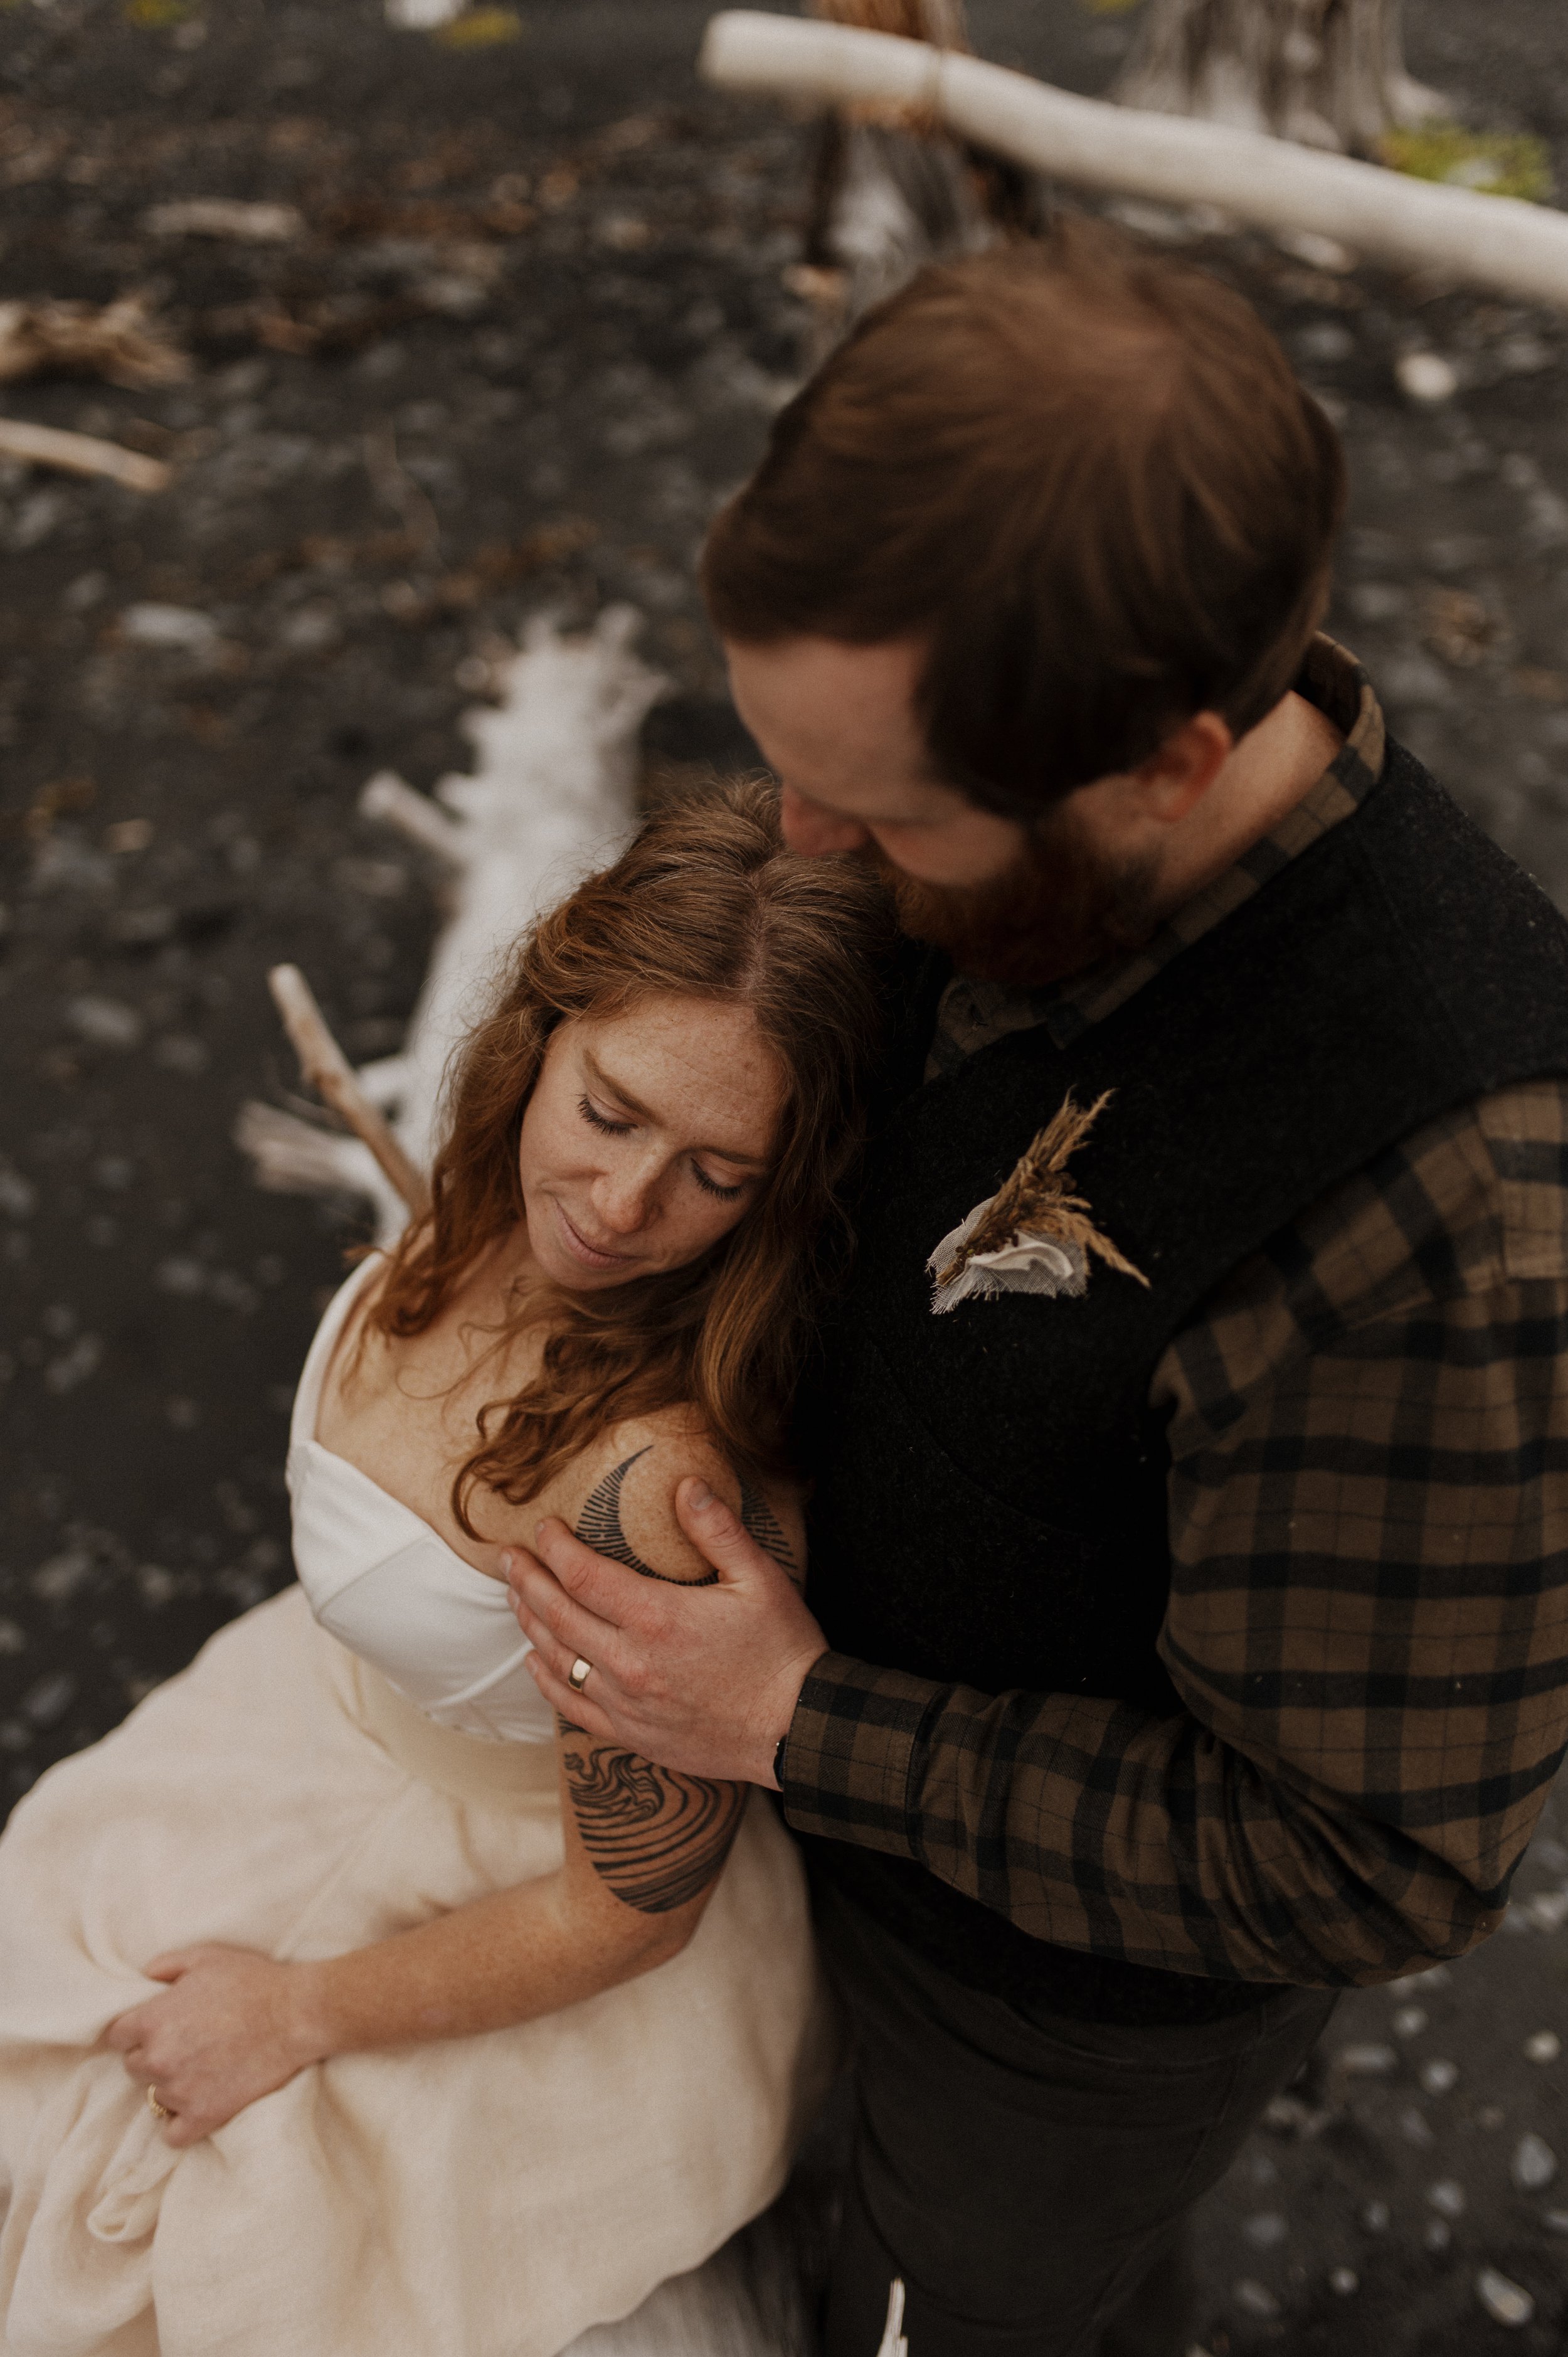 Adventurous Wedding In The Woods Of Seward, Alaska